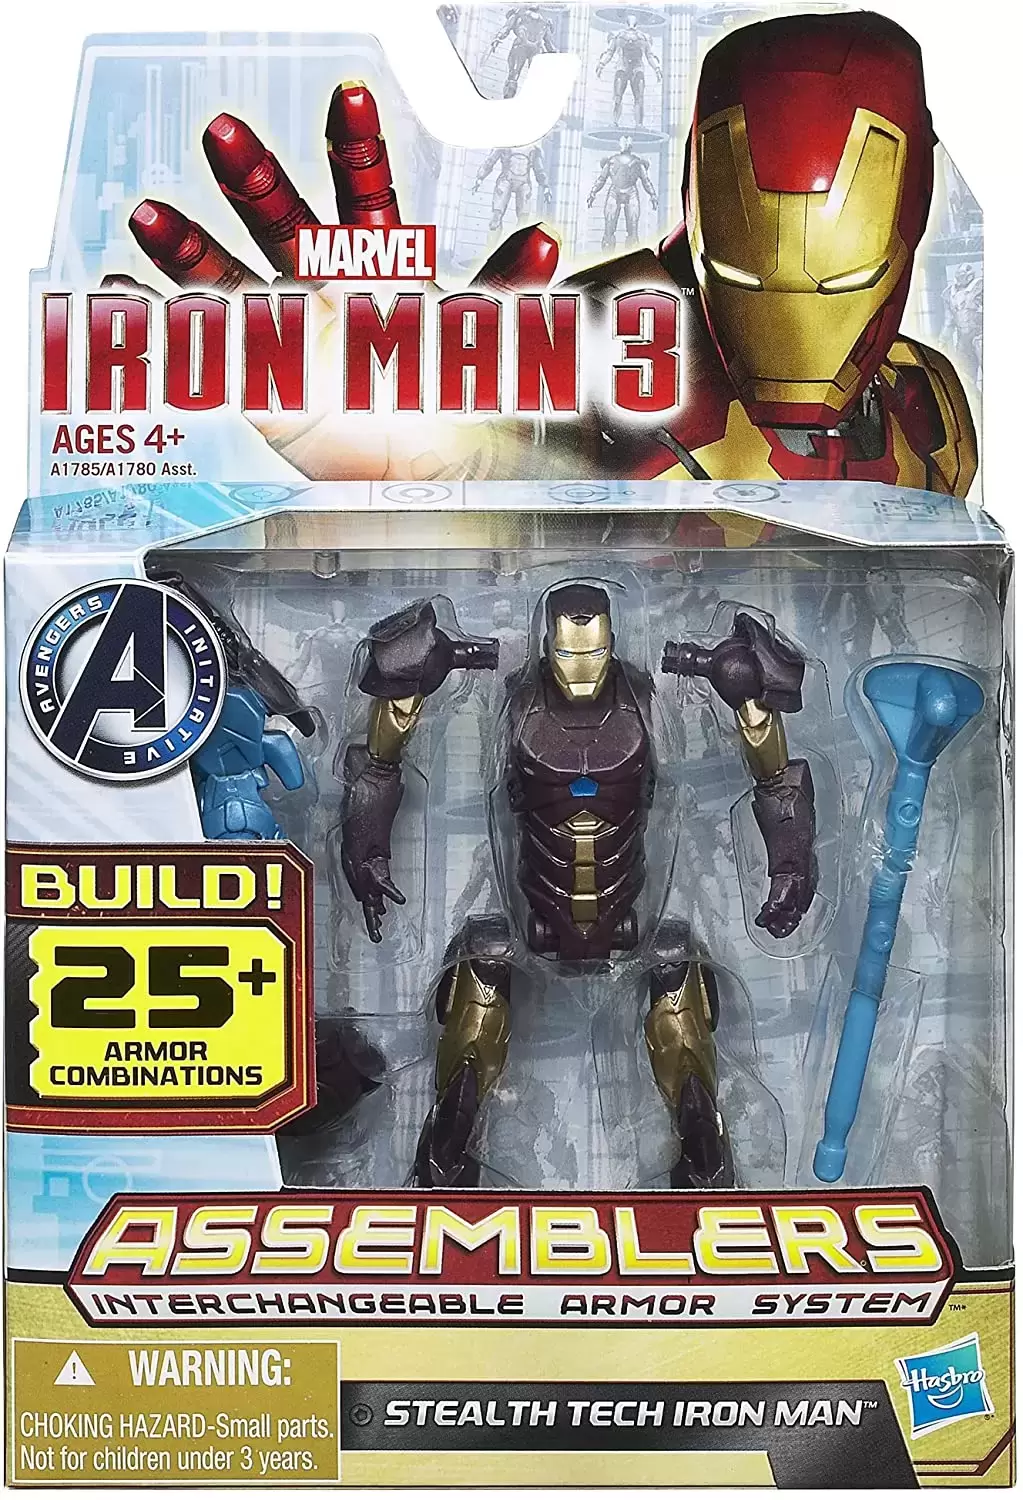 Iron Man 3 Action Figures - Stealth Tech Iron Man